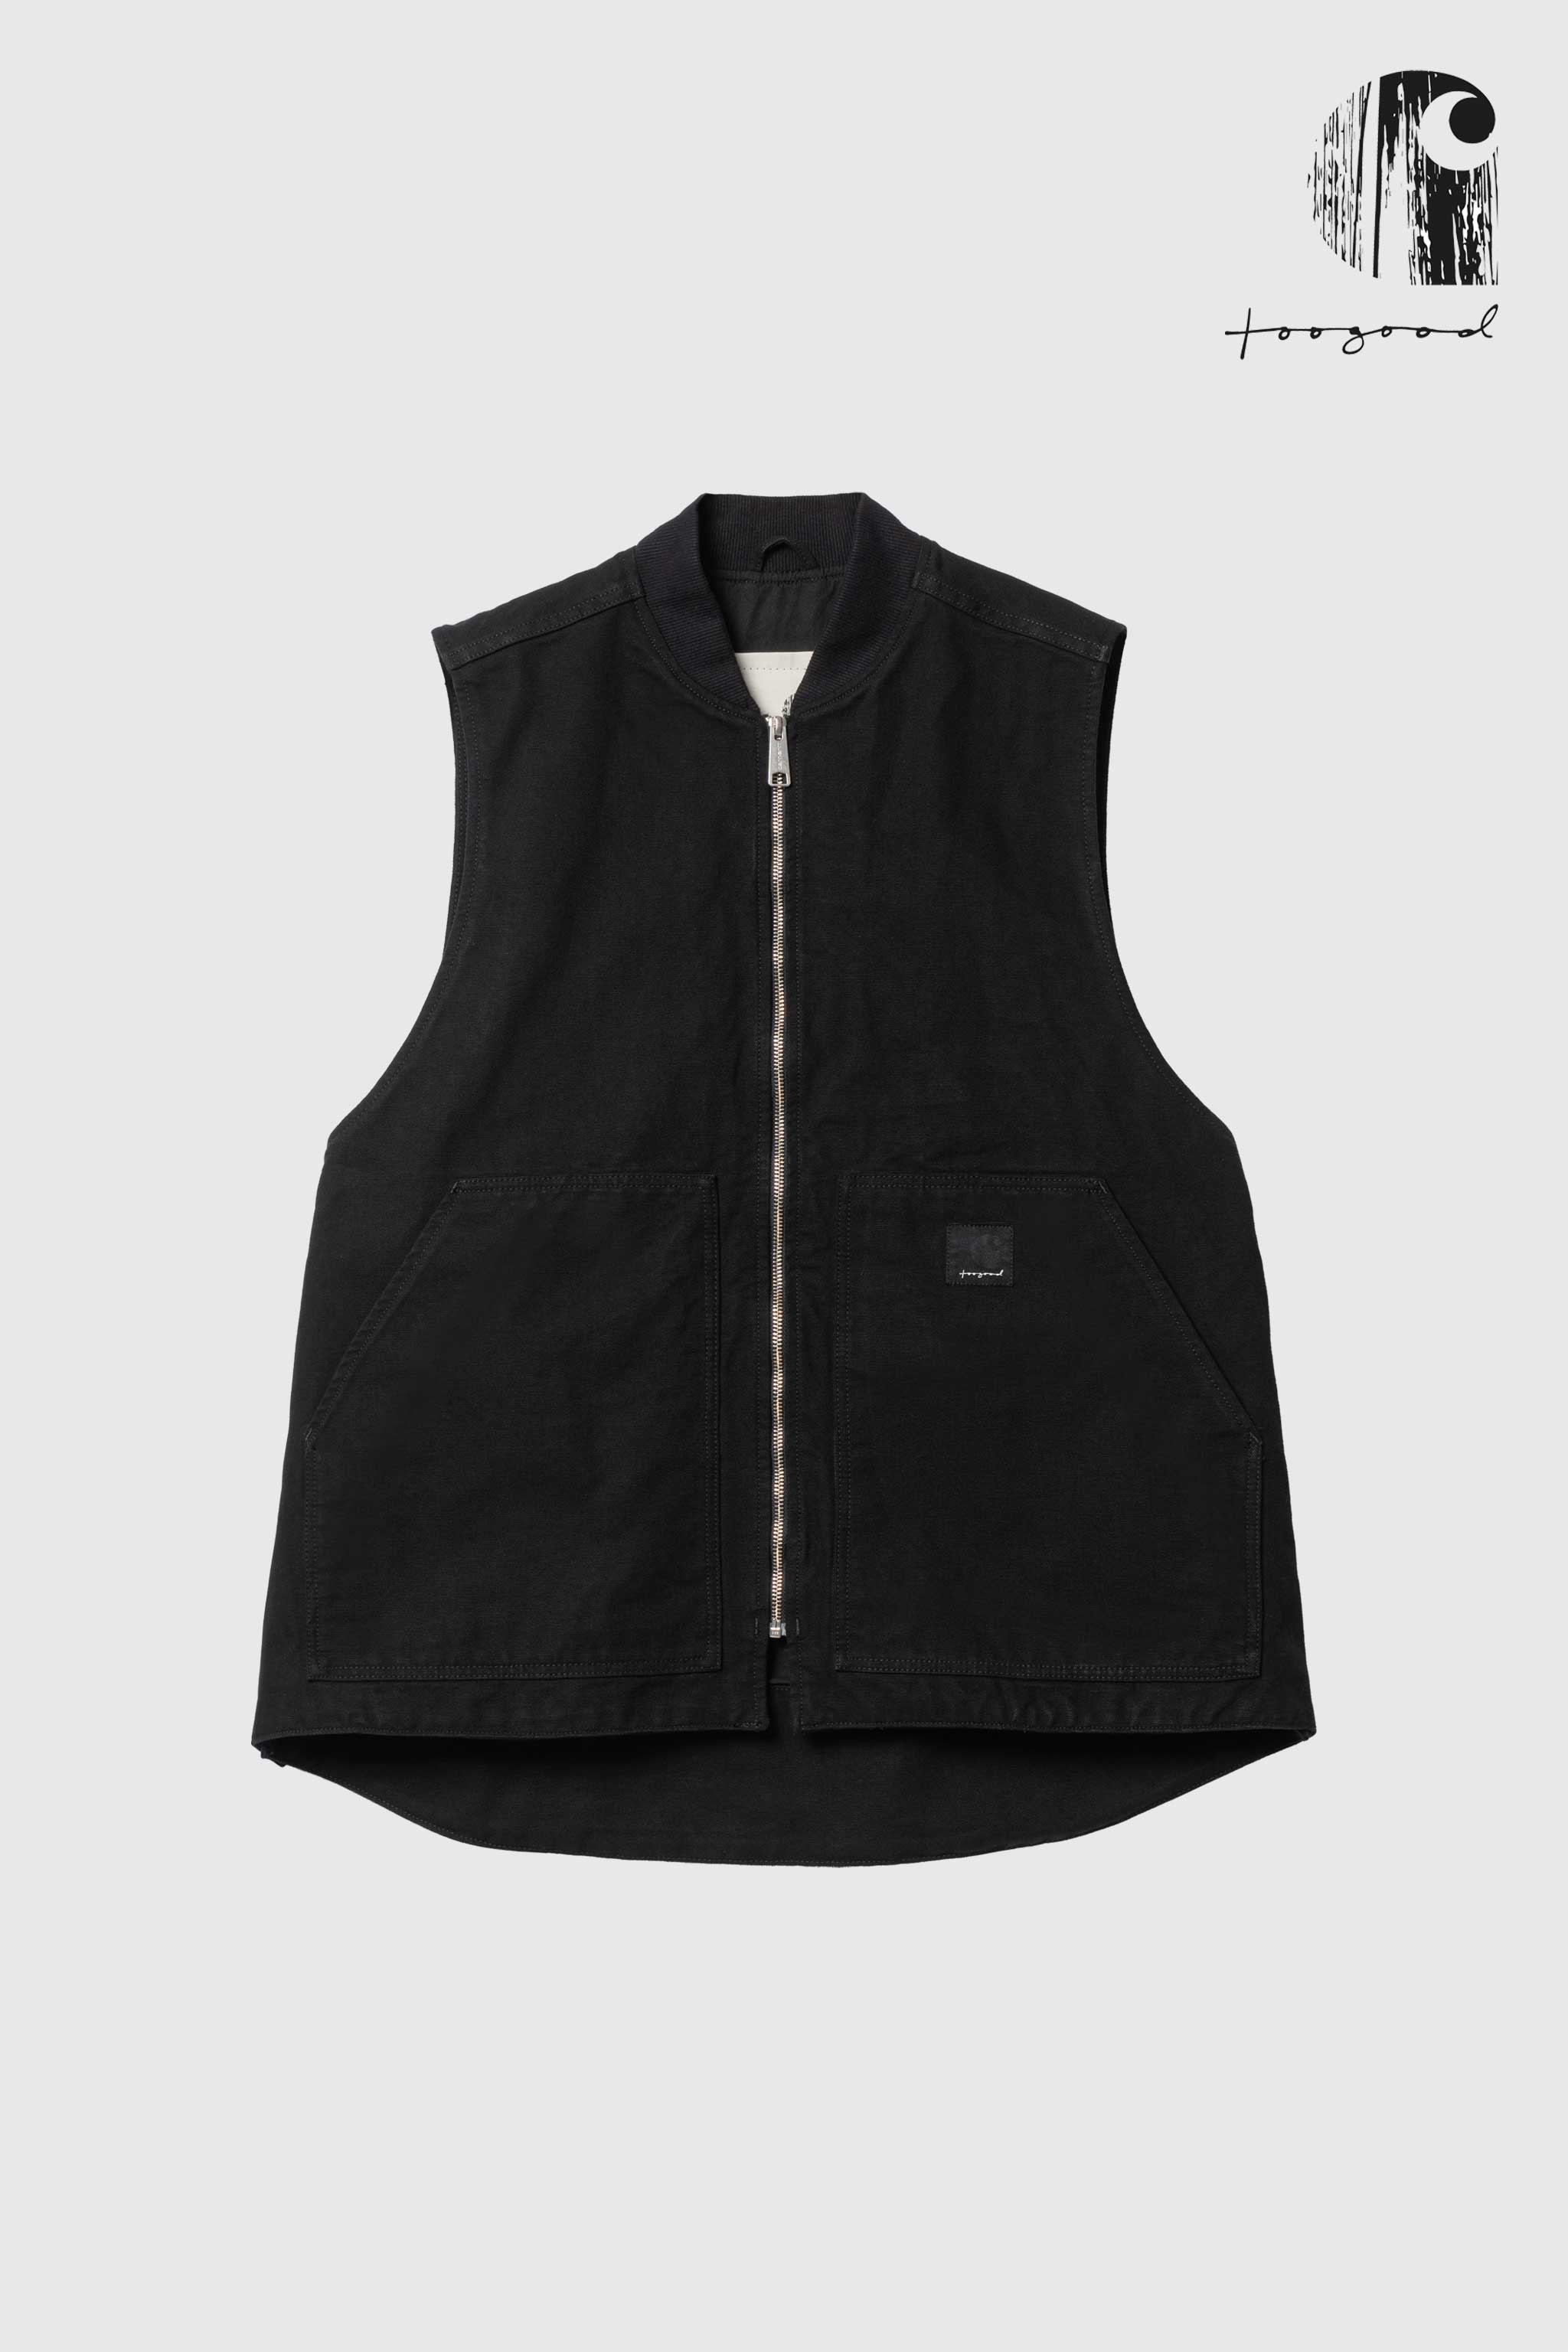 Carhartt TOOGOOD vest ベスト sizeXS black-